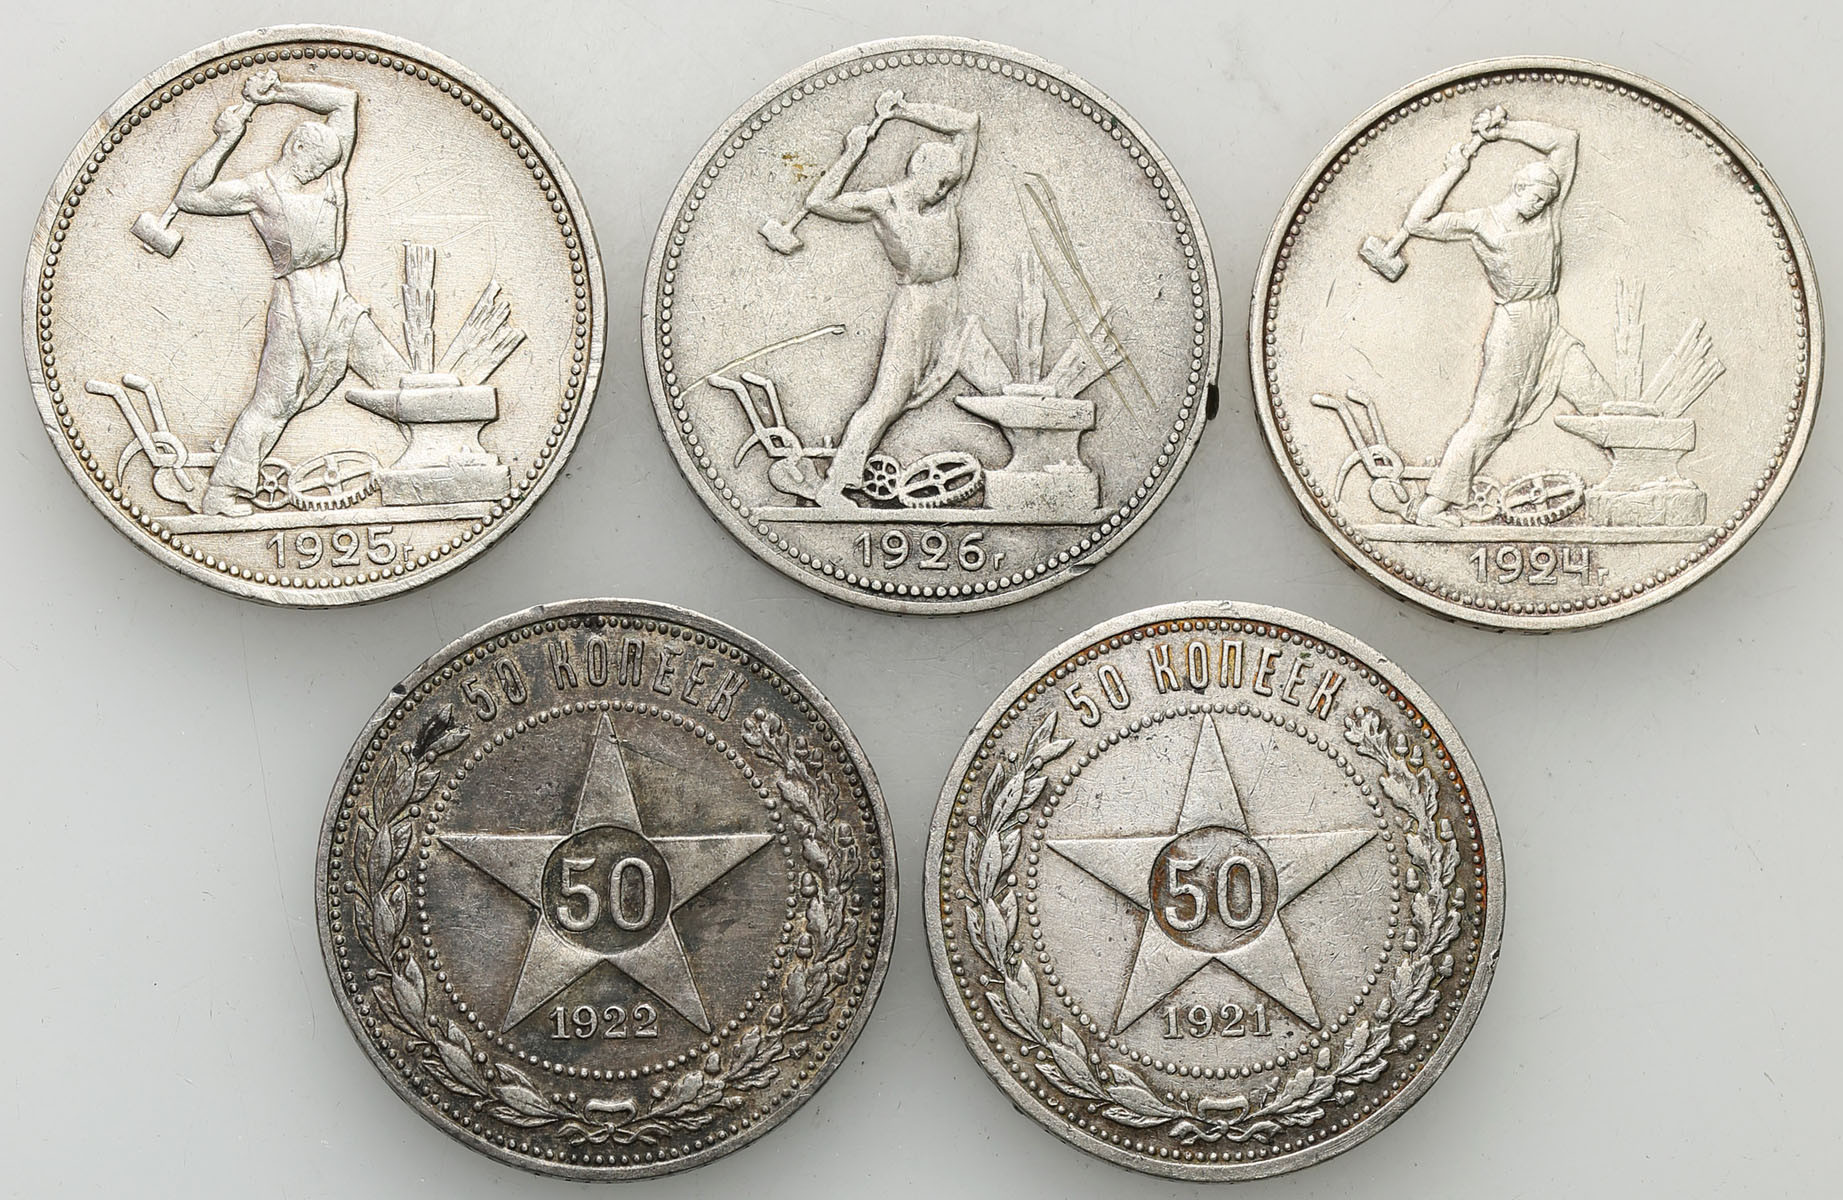 Rosja. 50 kopiejek (połtinnik) 1921-1926, zestaw 5 monet